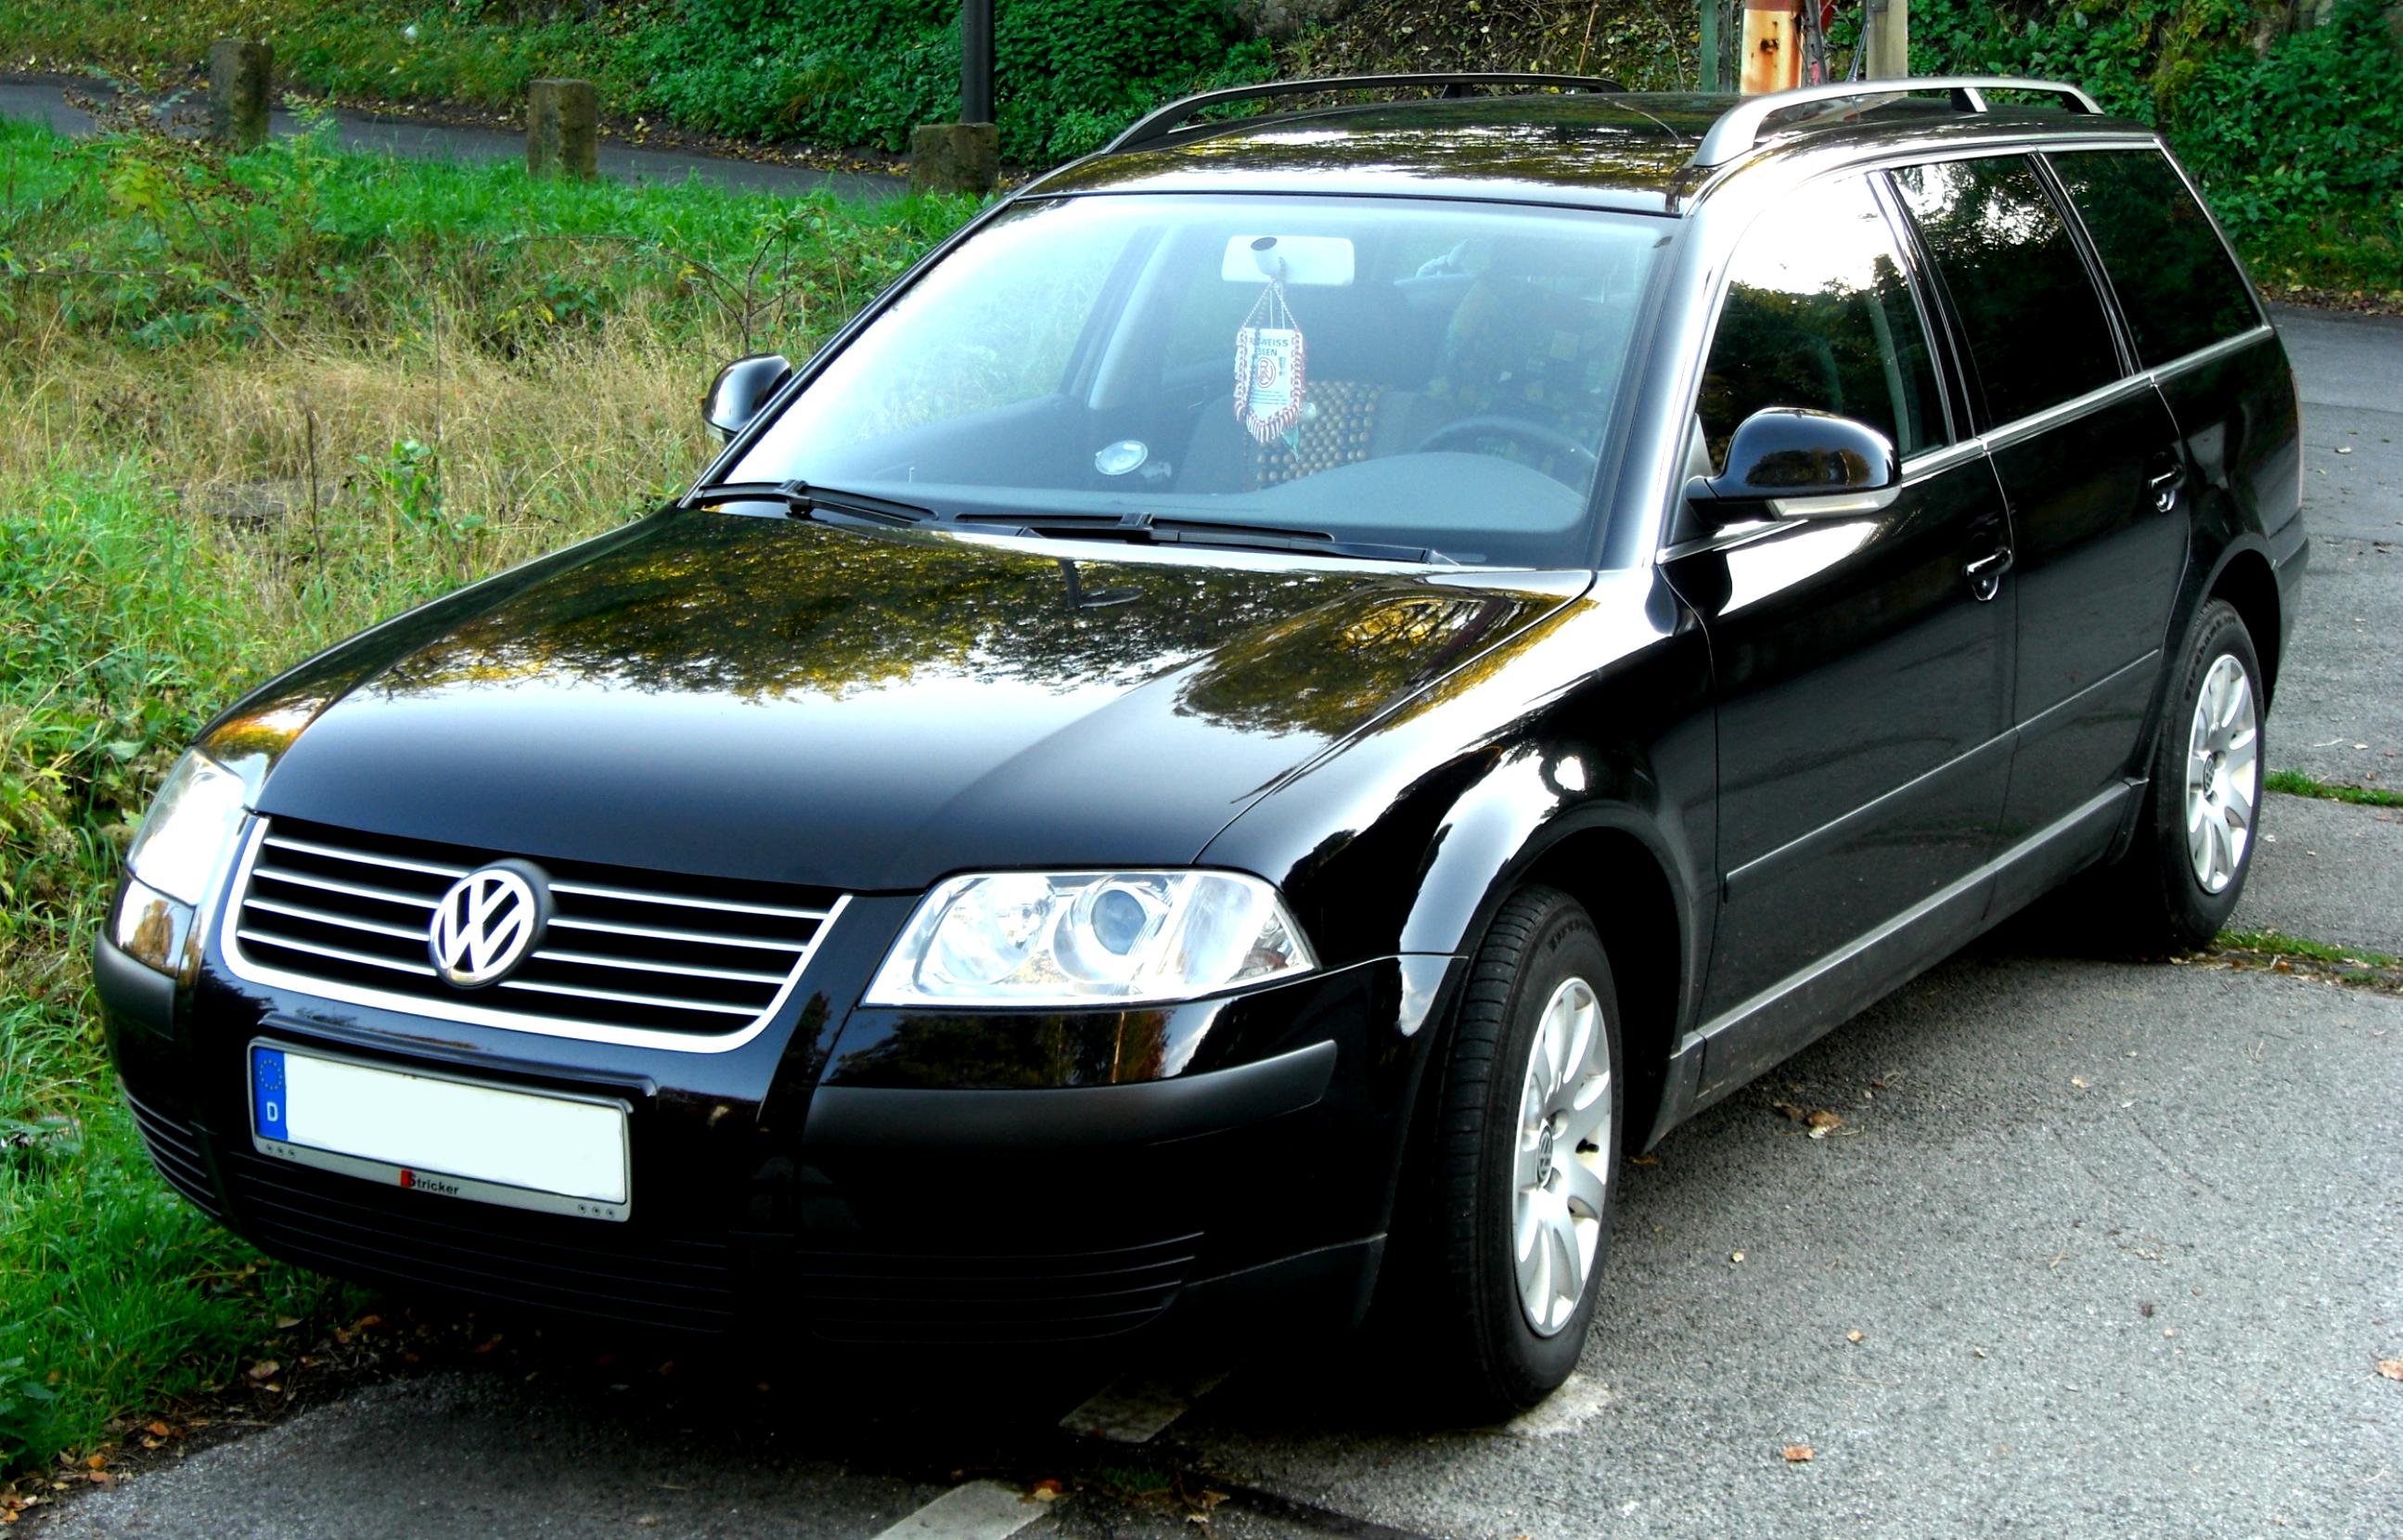 Volkswagen b5 универсал. VW Passat b5 variant. VW Passat b5 2003. Фольксваген Пассат б5 универсал. Volkswagen Passat b5 универсал.